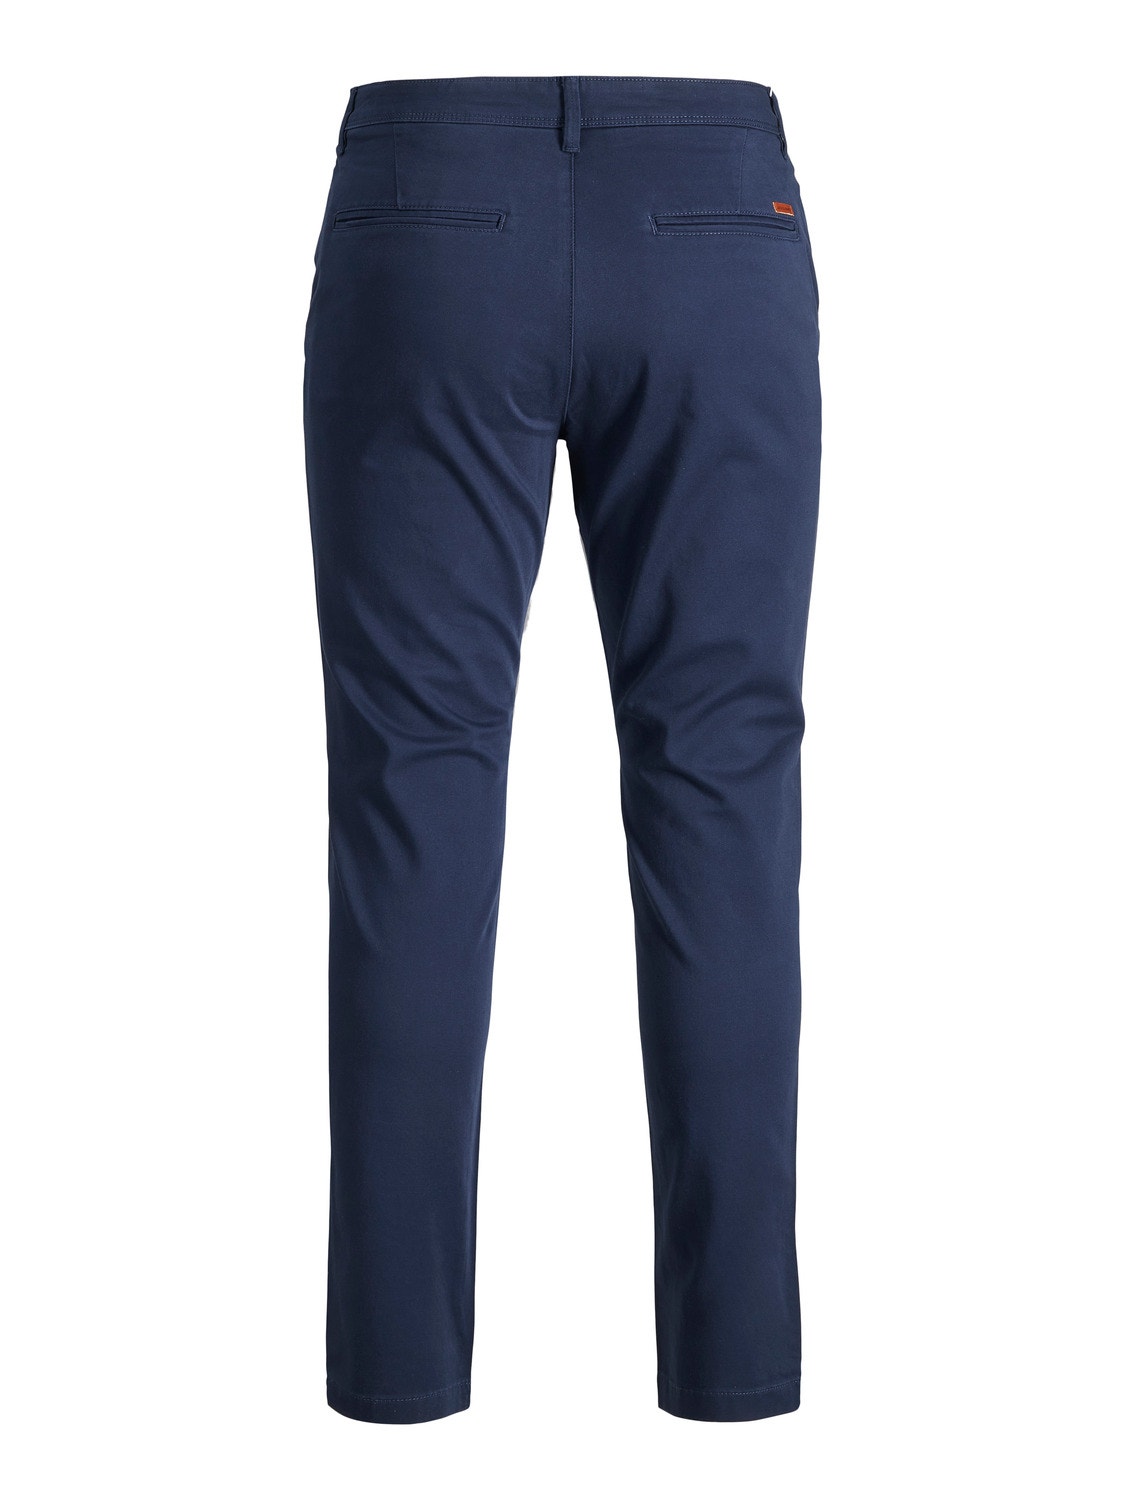 Jack & Jones Slim Fit Chino kelnės -Navy Blazer - 12150148